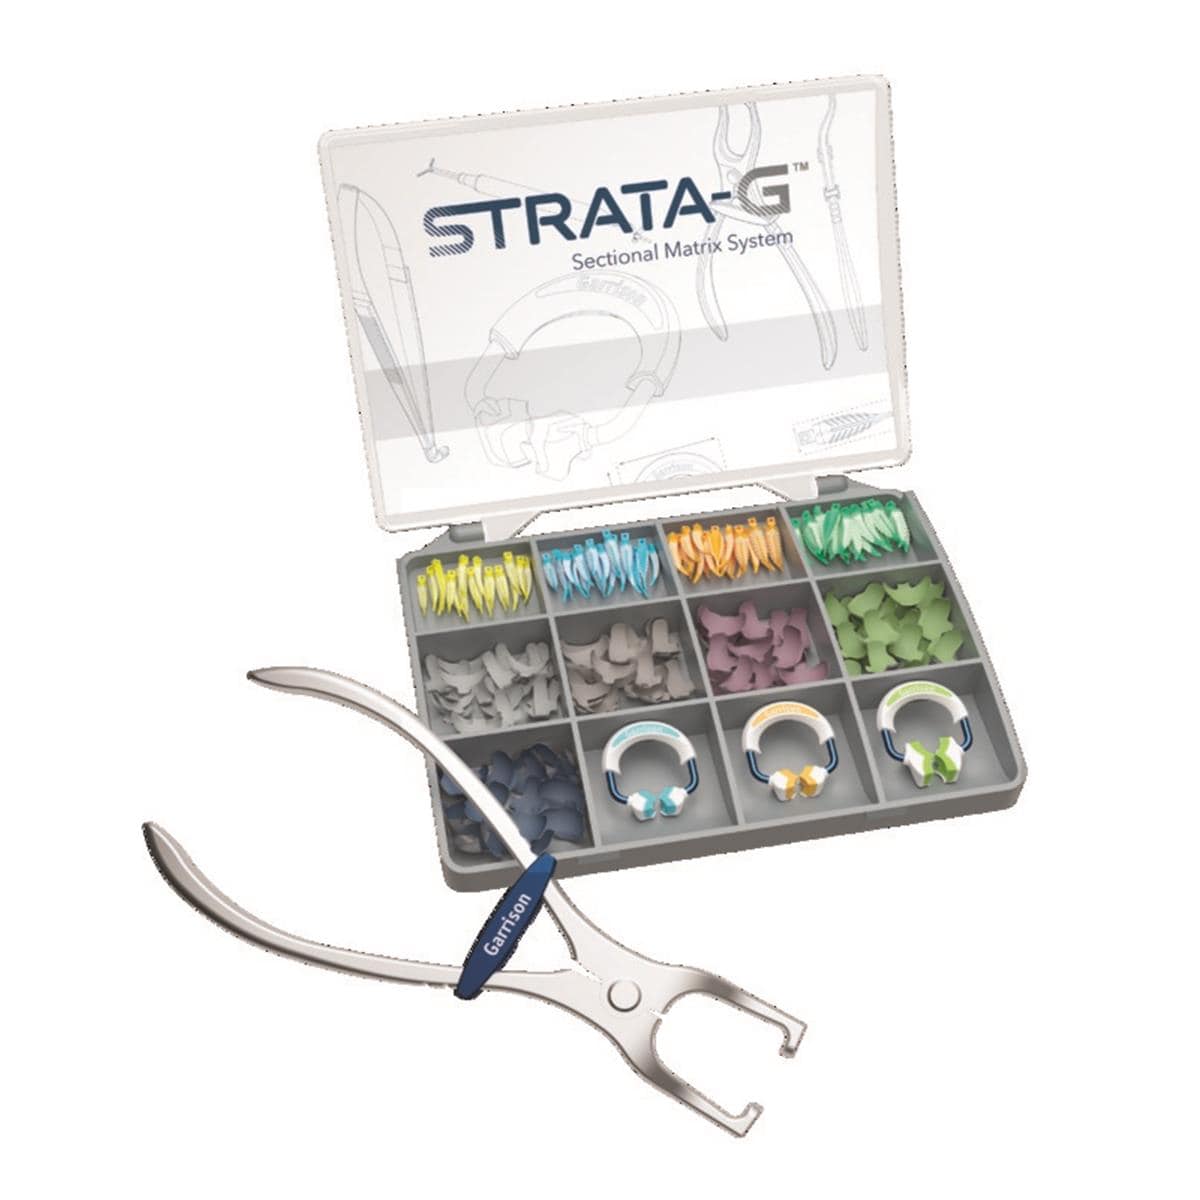 STRATA-G SECTIONAL MATRIX SYSTEM INTRO KIT